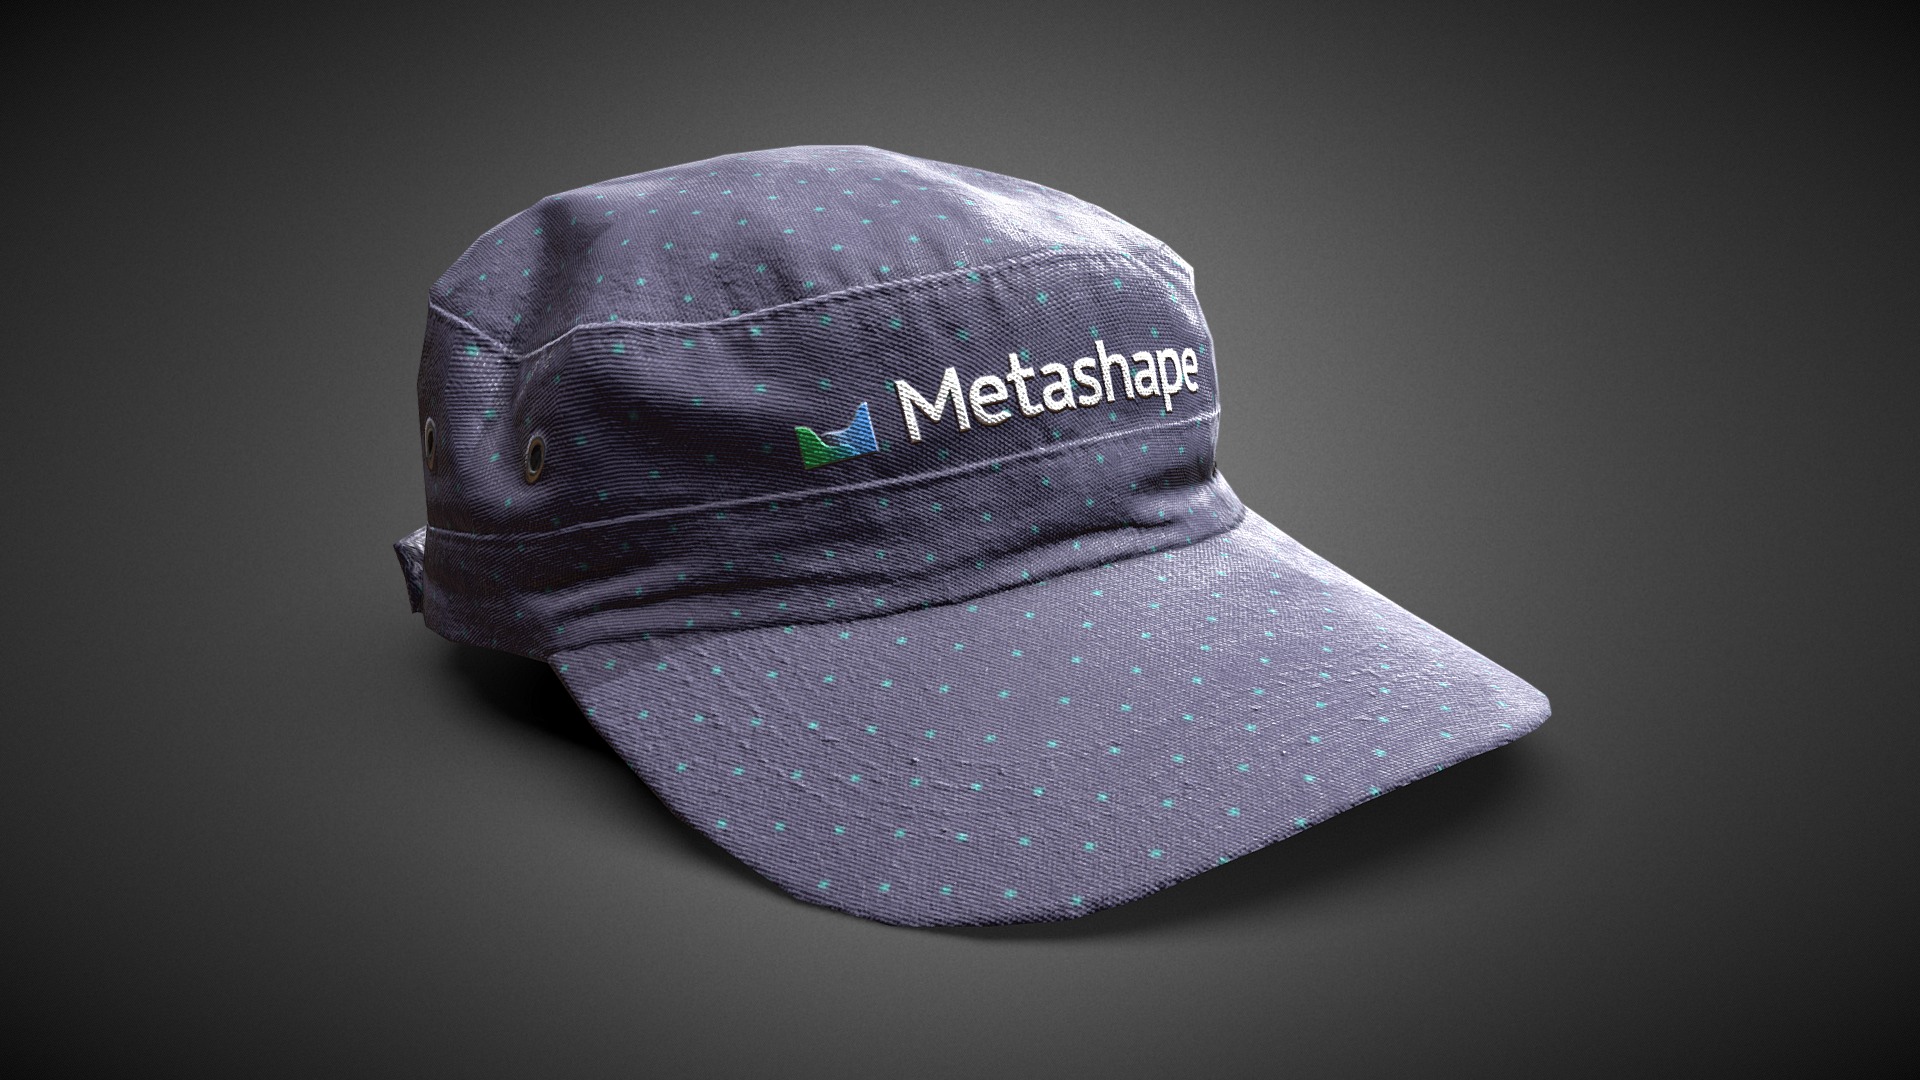 3D model Metashape cap – Purple #AgisoftClothesChallenge - This is a 3D model of the Metashape cap - Purple #AgisoftClothesChallenge. The 3D model is about a black hat with a white logo.